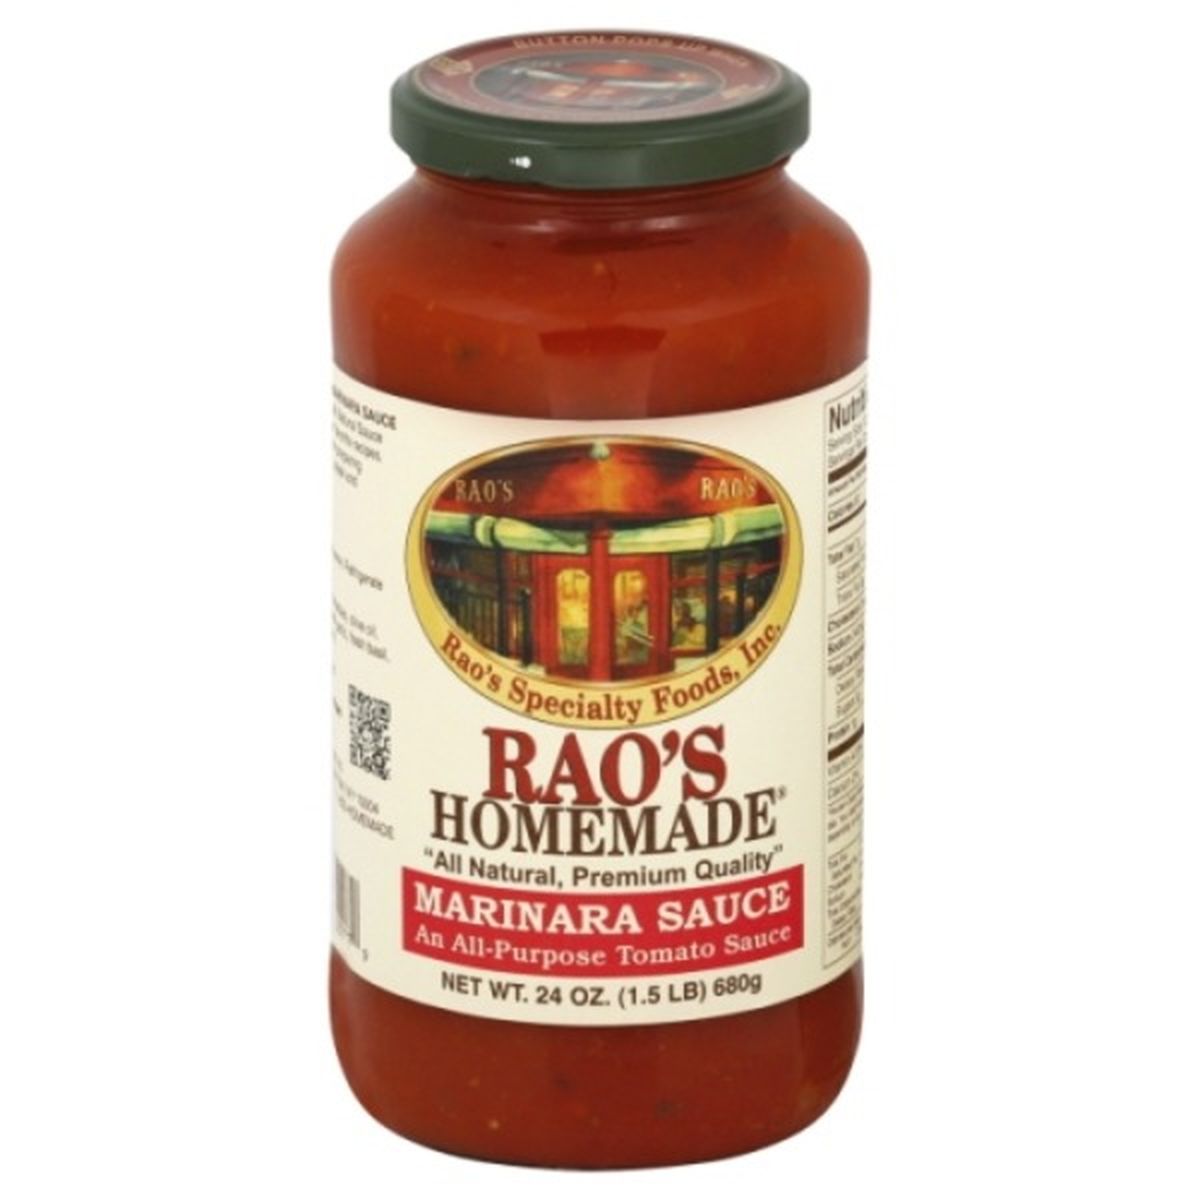 Calories in Rao's Homemade Homemade Marinara Sauce